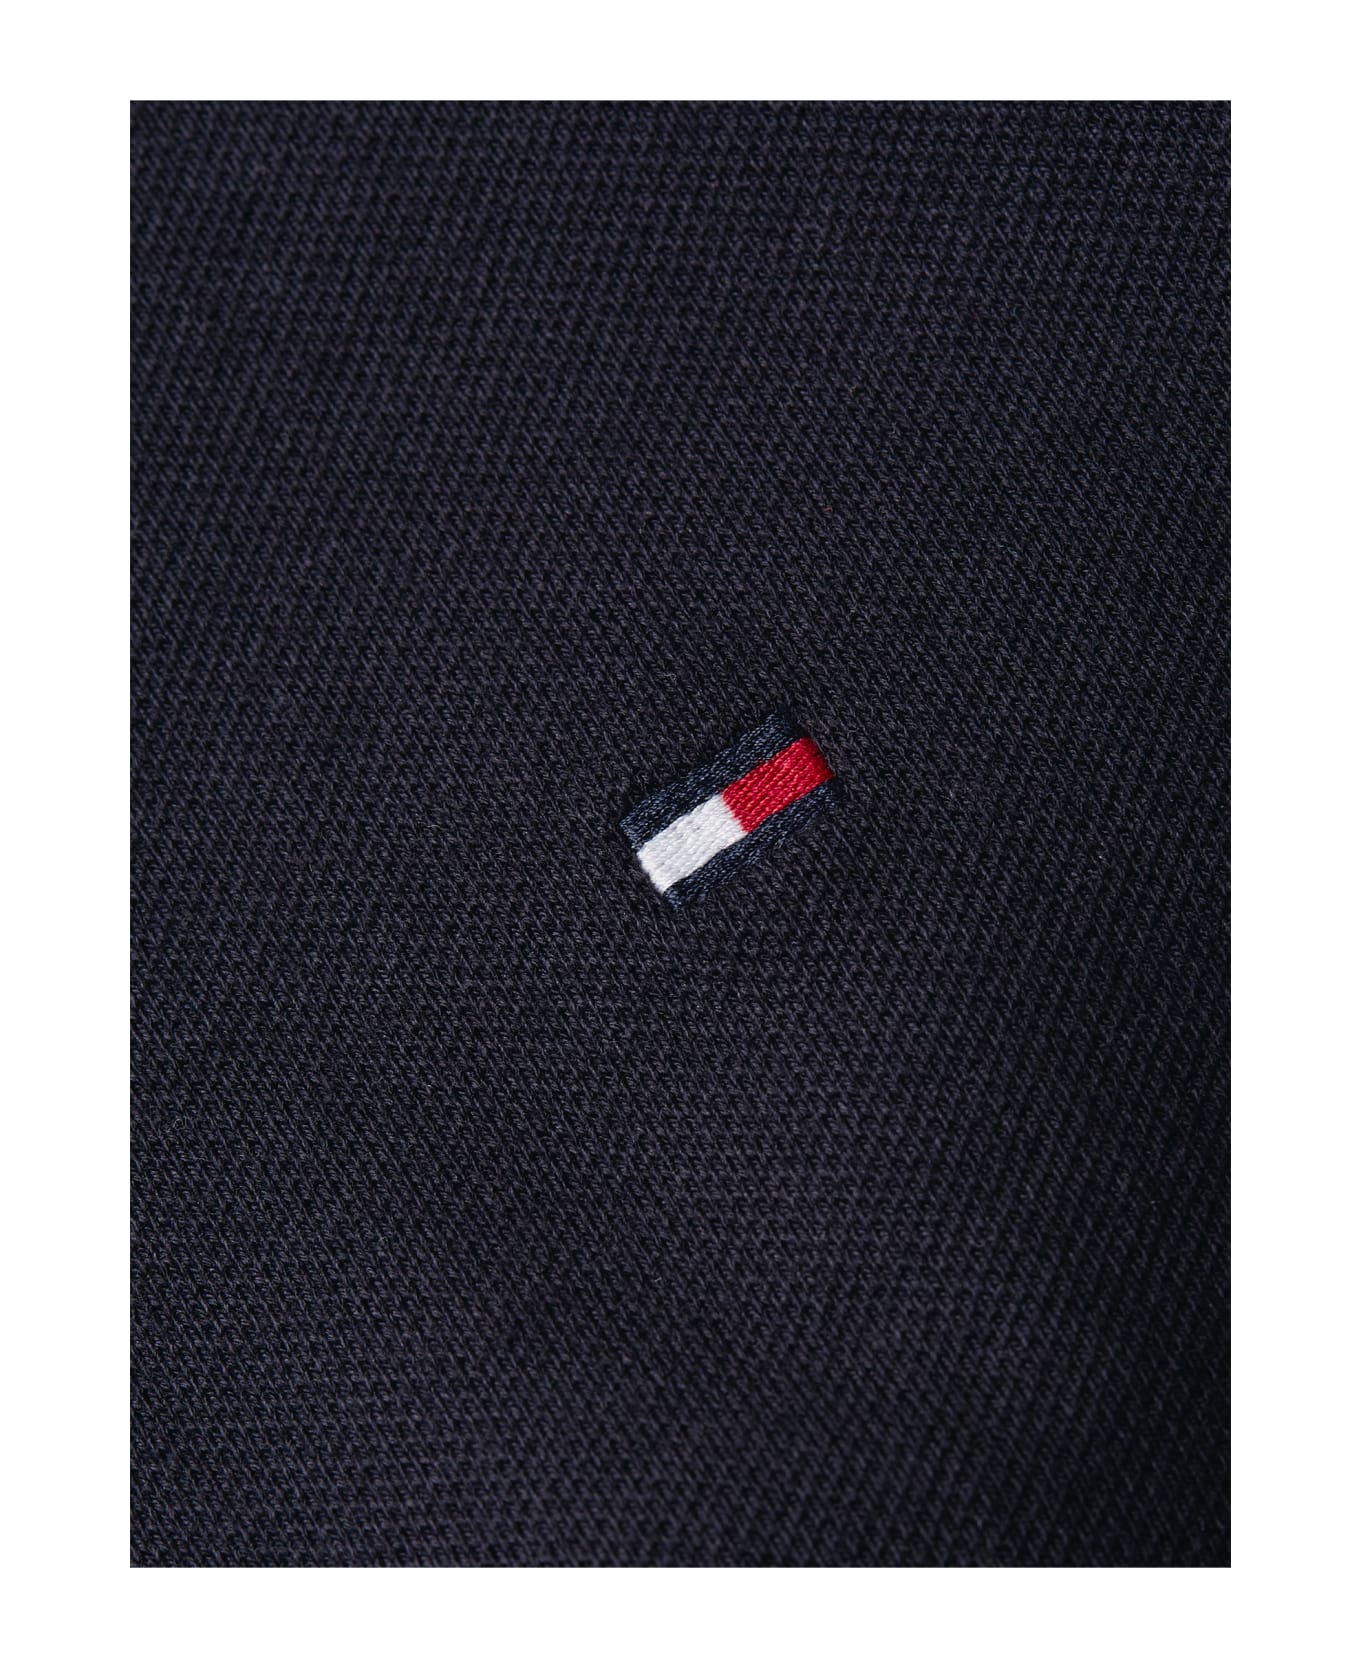 Tommy Hilfiger Navy Blue Short-sleeved Polo Shirt - DESERT SKY